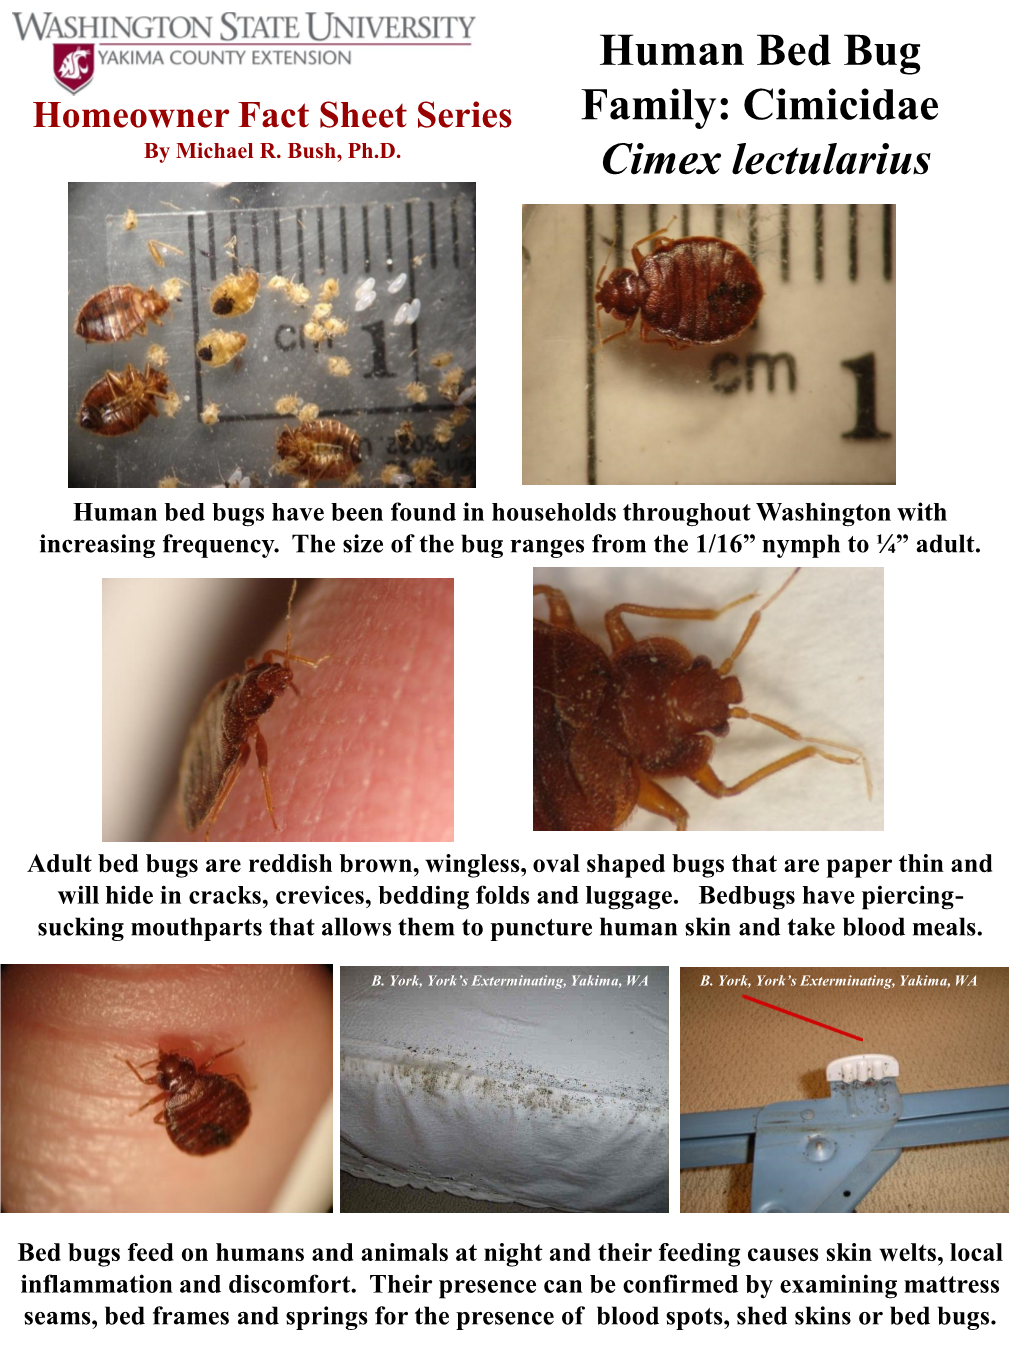 Human Bed Bug Family: Cimicidae Cimex Lectularius